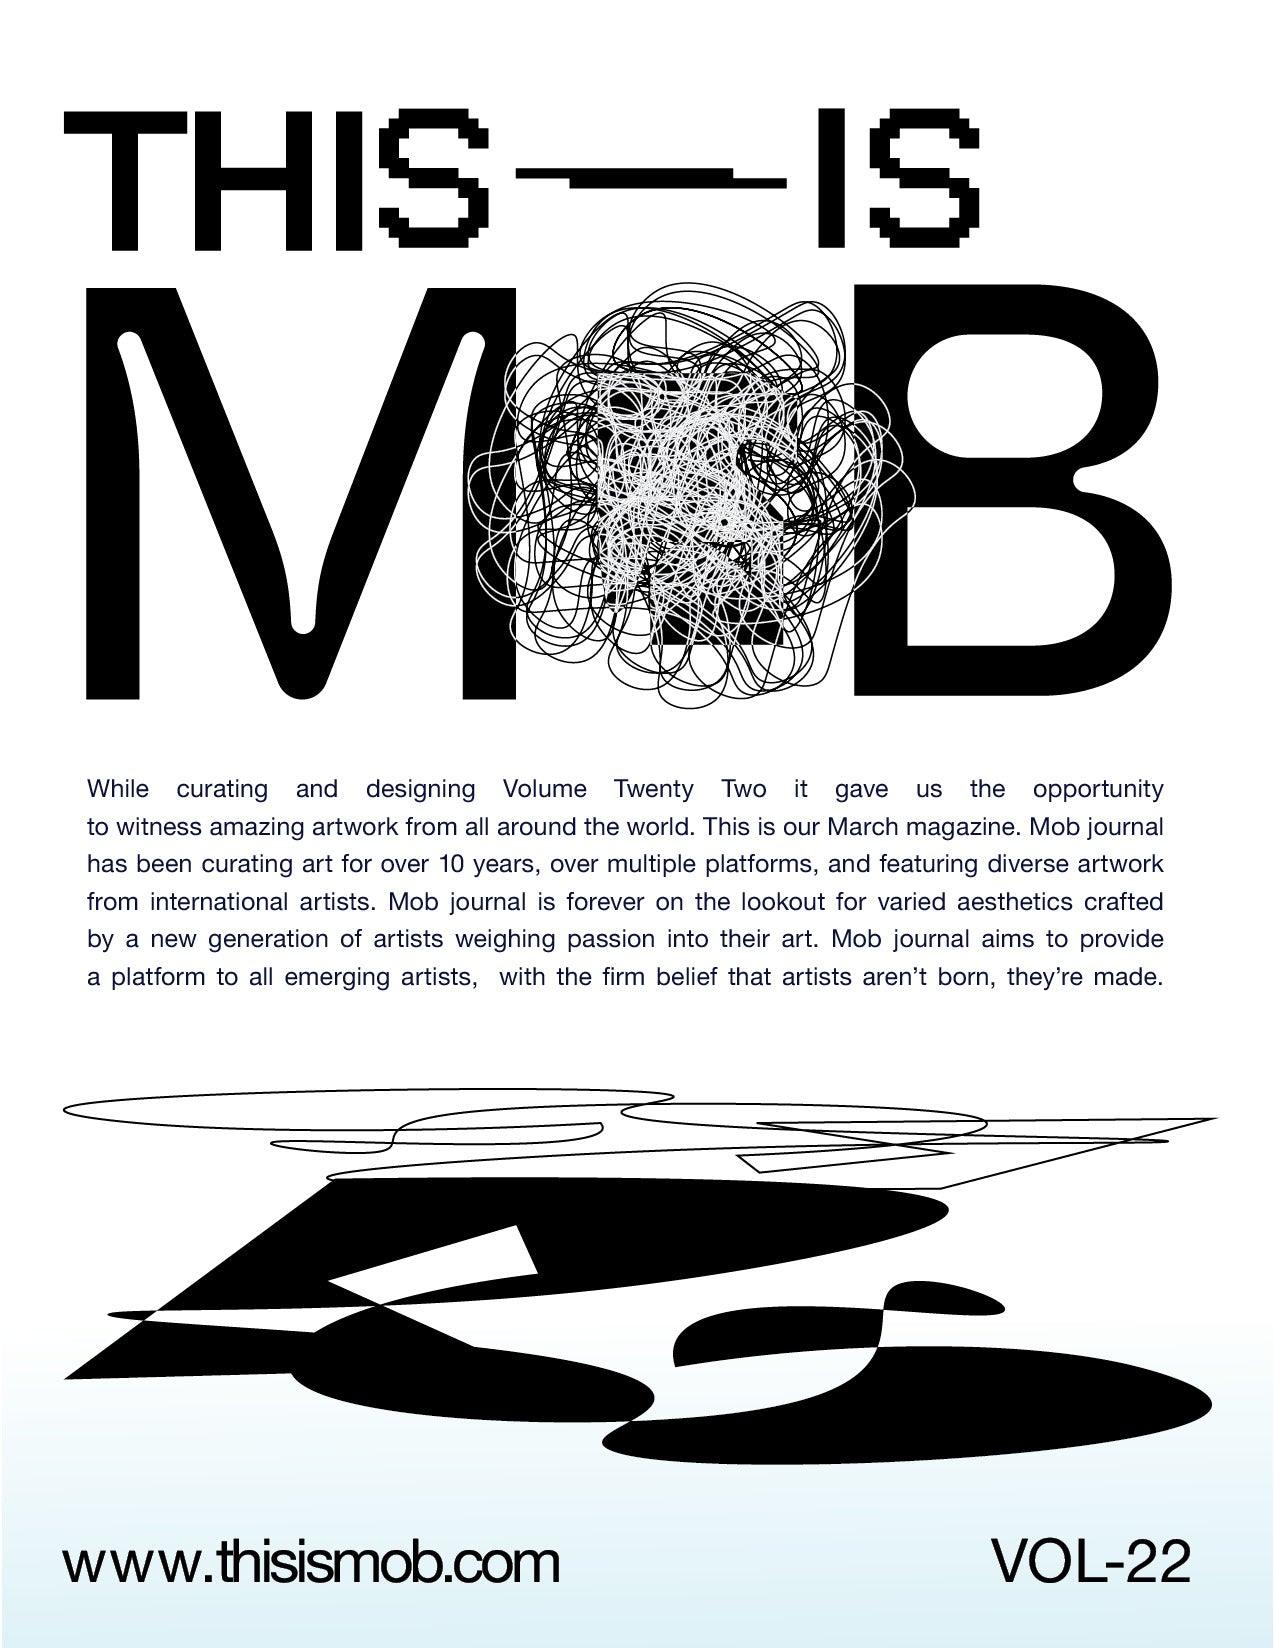 MOB JOURNAL | VOLUME TWENTY TWO | ISSUE #15 - Mob Journal